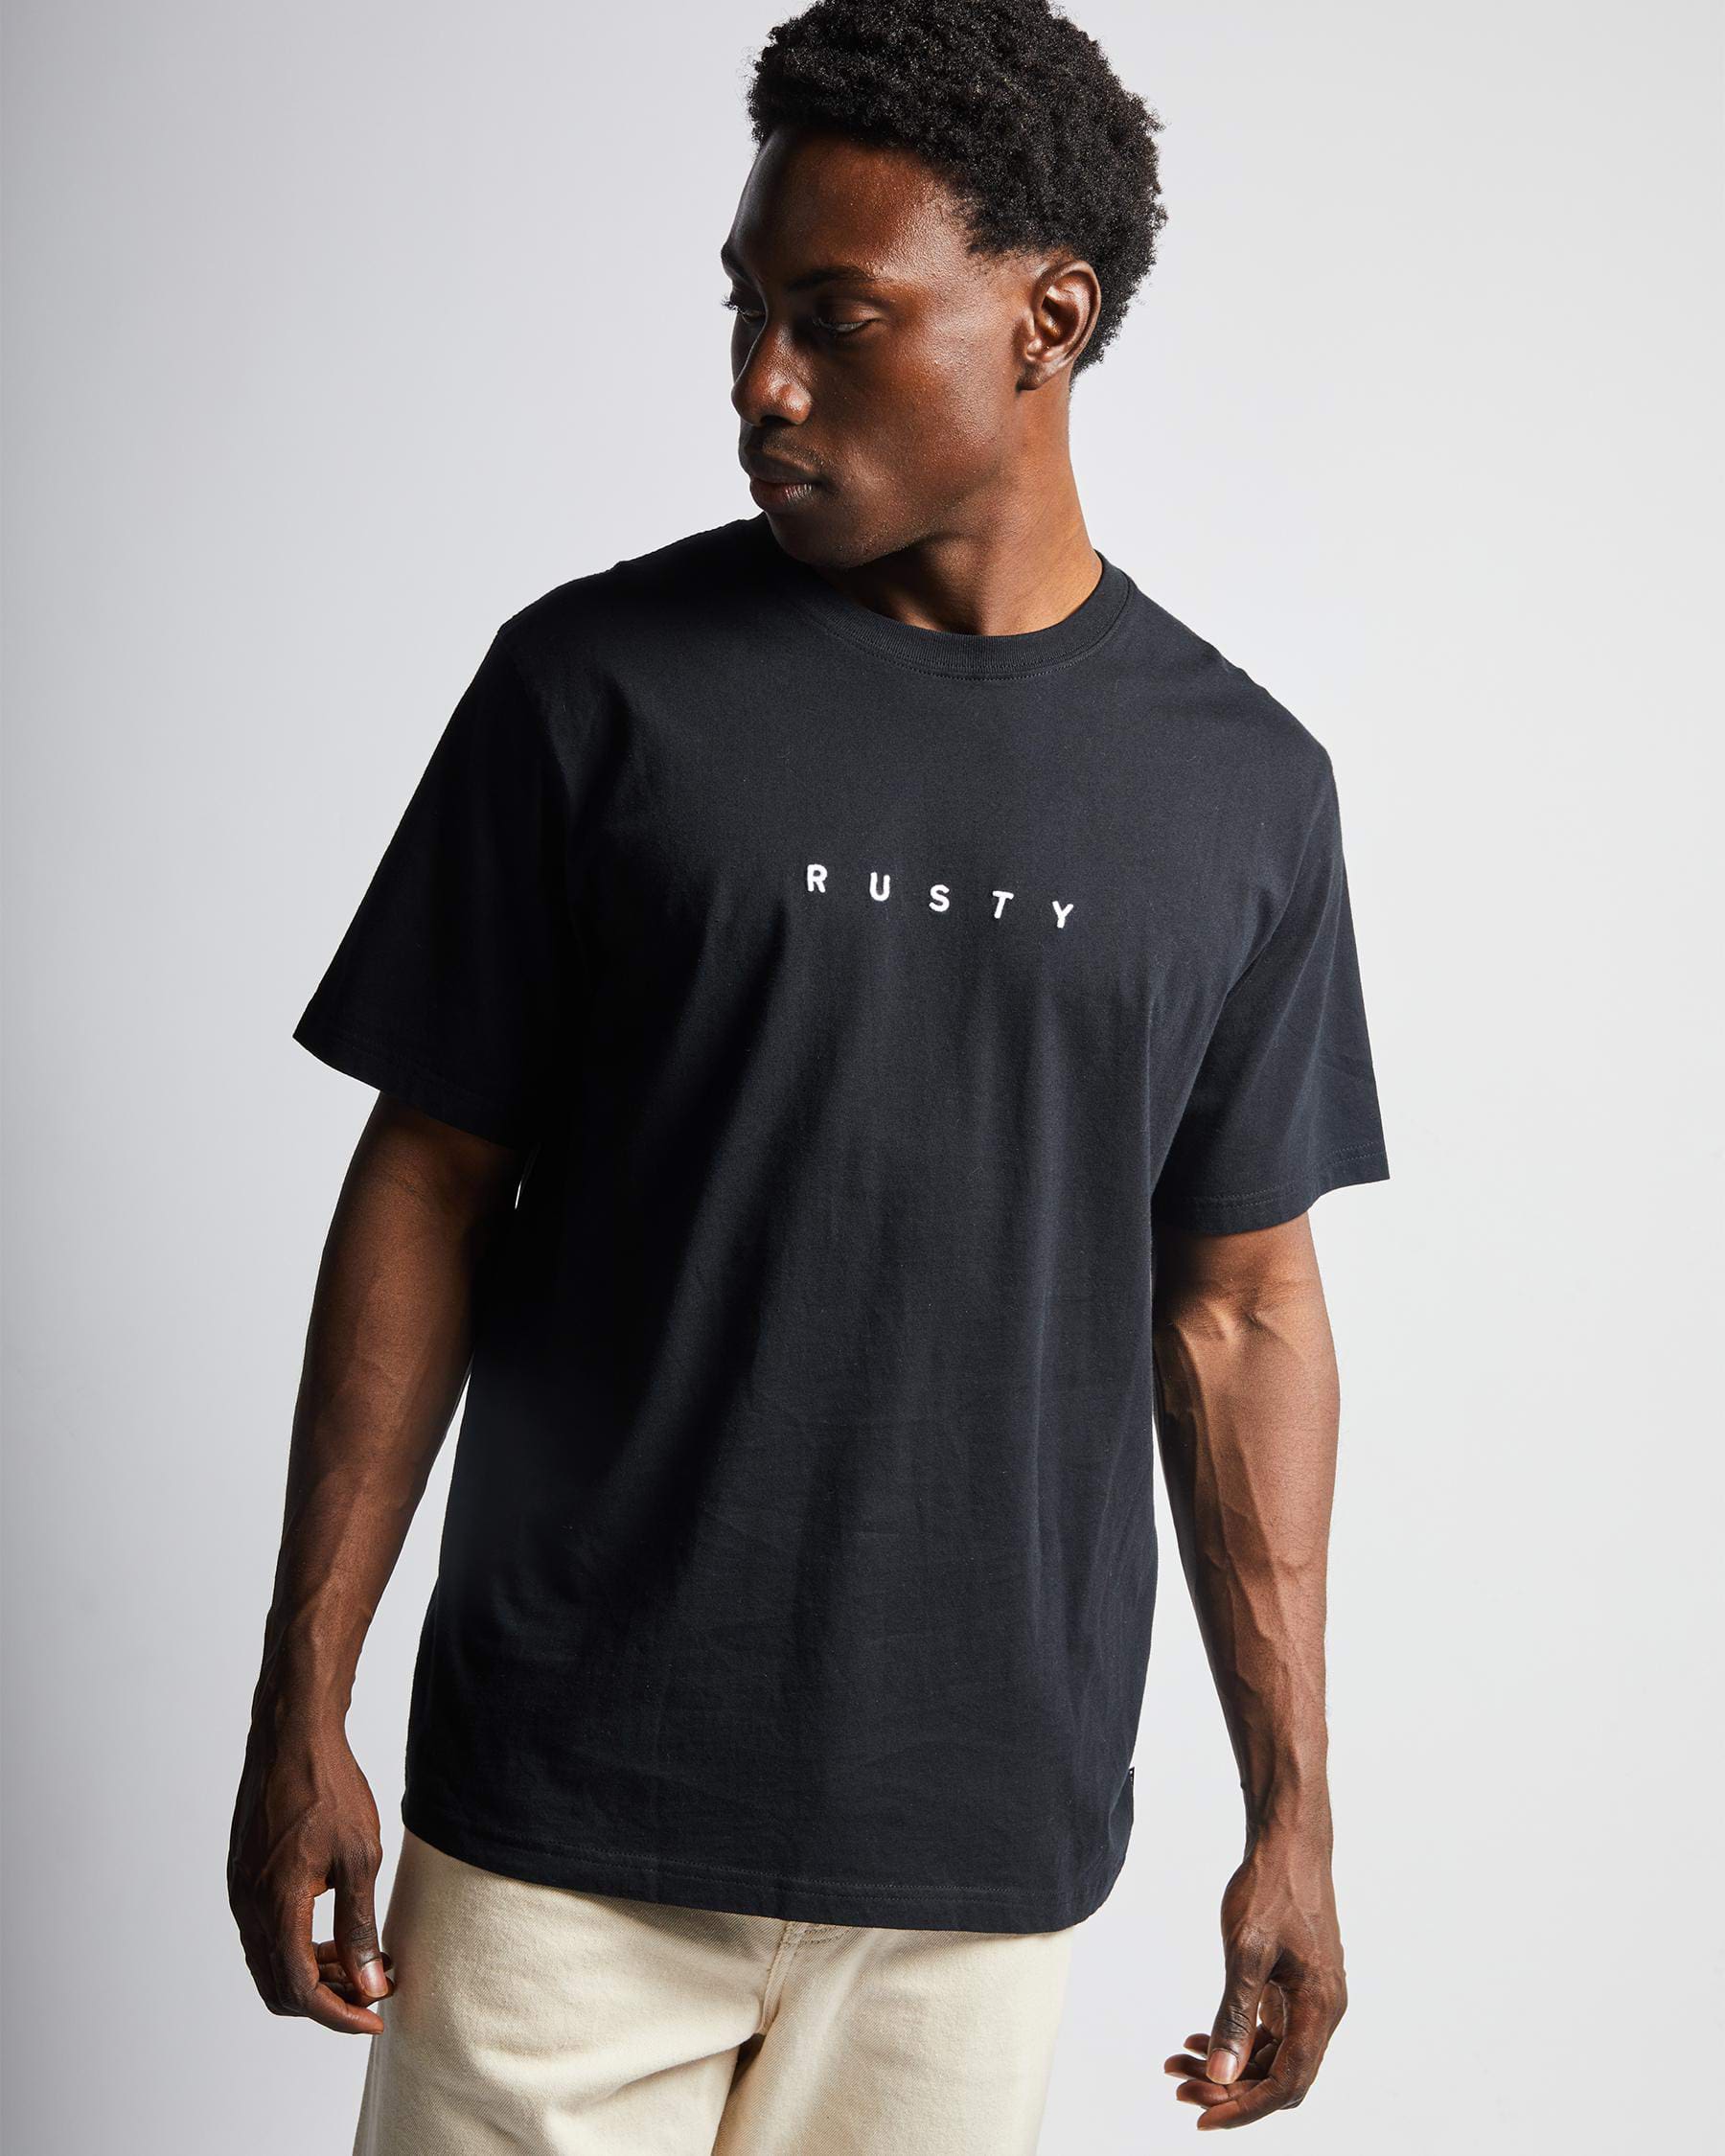 Shop Rusty Short Cut 2 T-Shirt In Black - Fast Shipping & Easy Returns ...